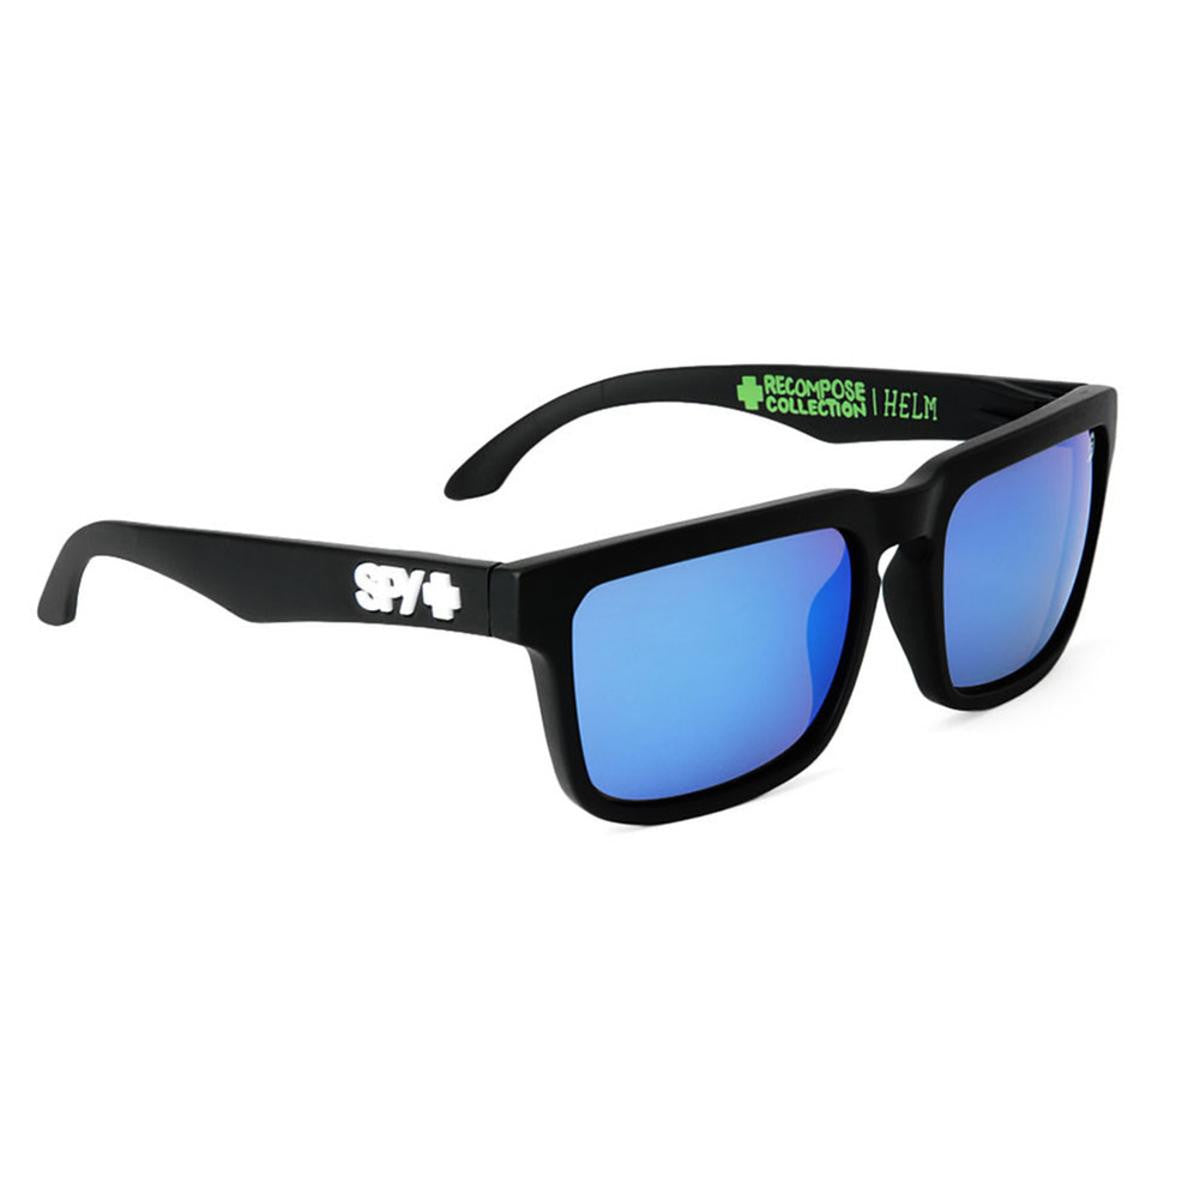 Spy Optic Helm Men's Sunglasses